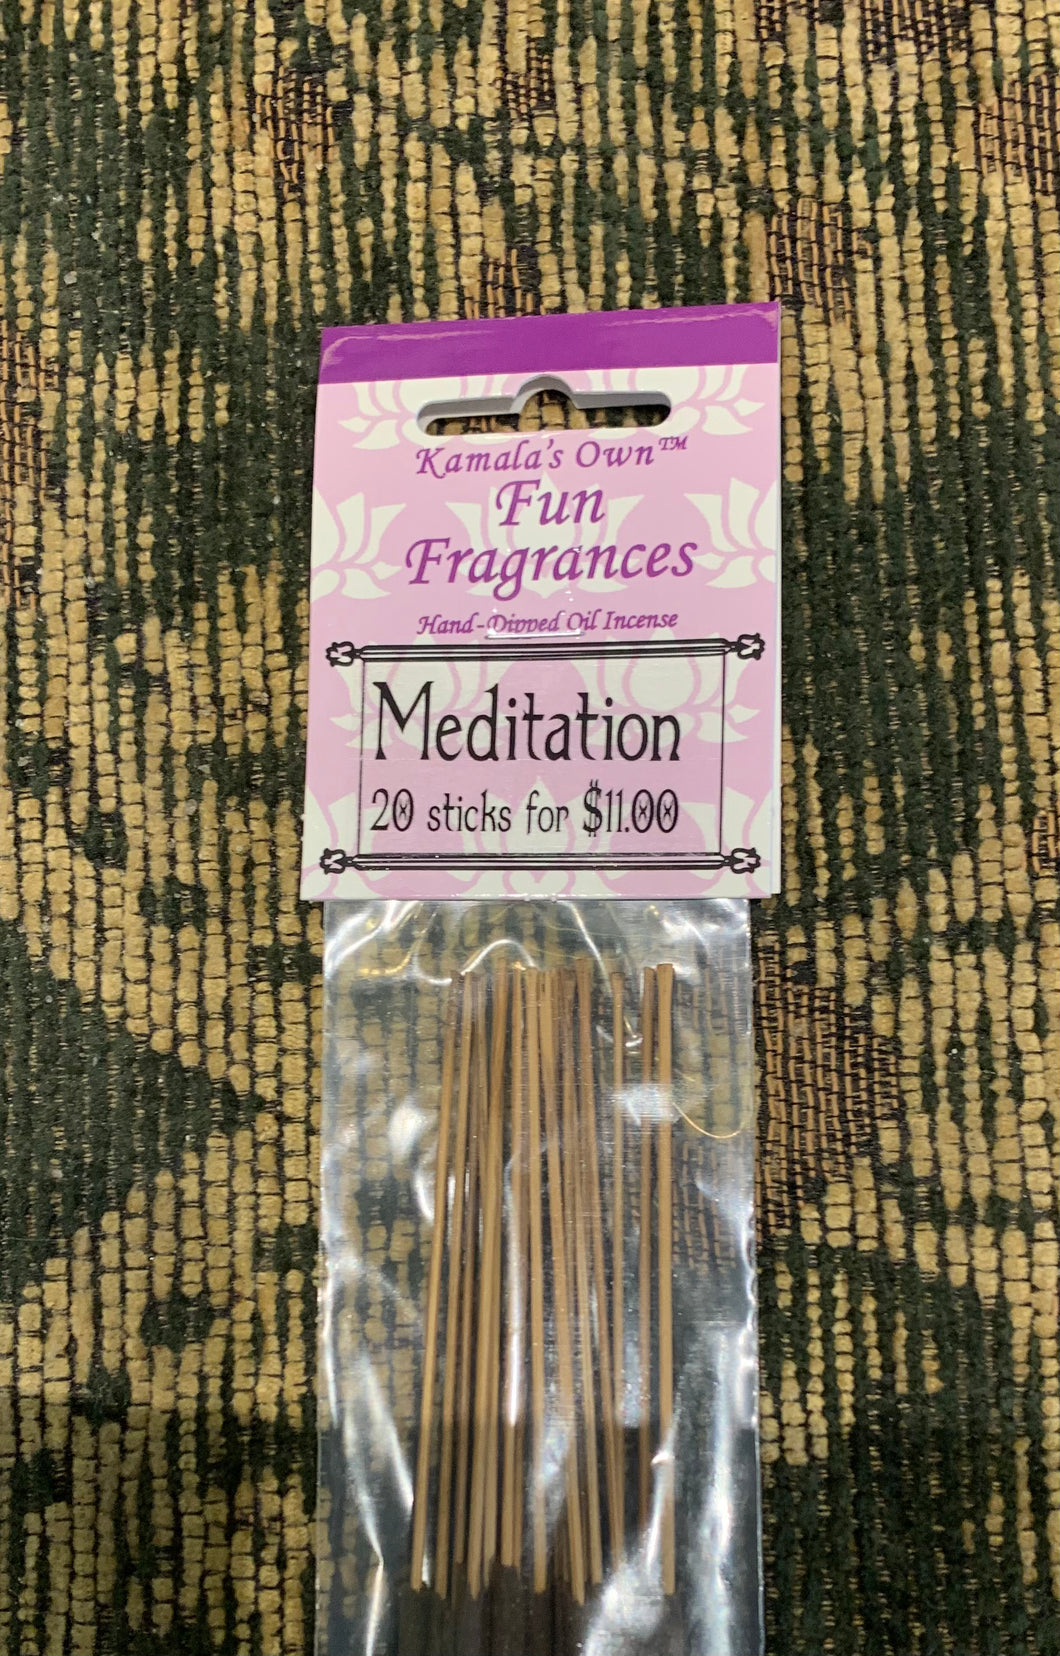 Meditation sticks